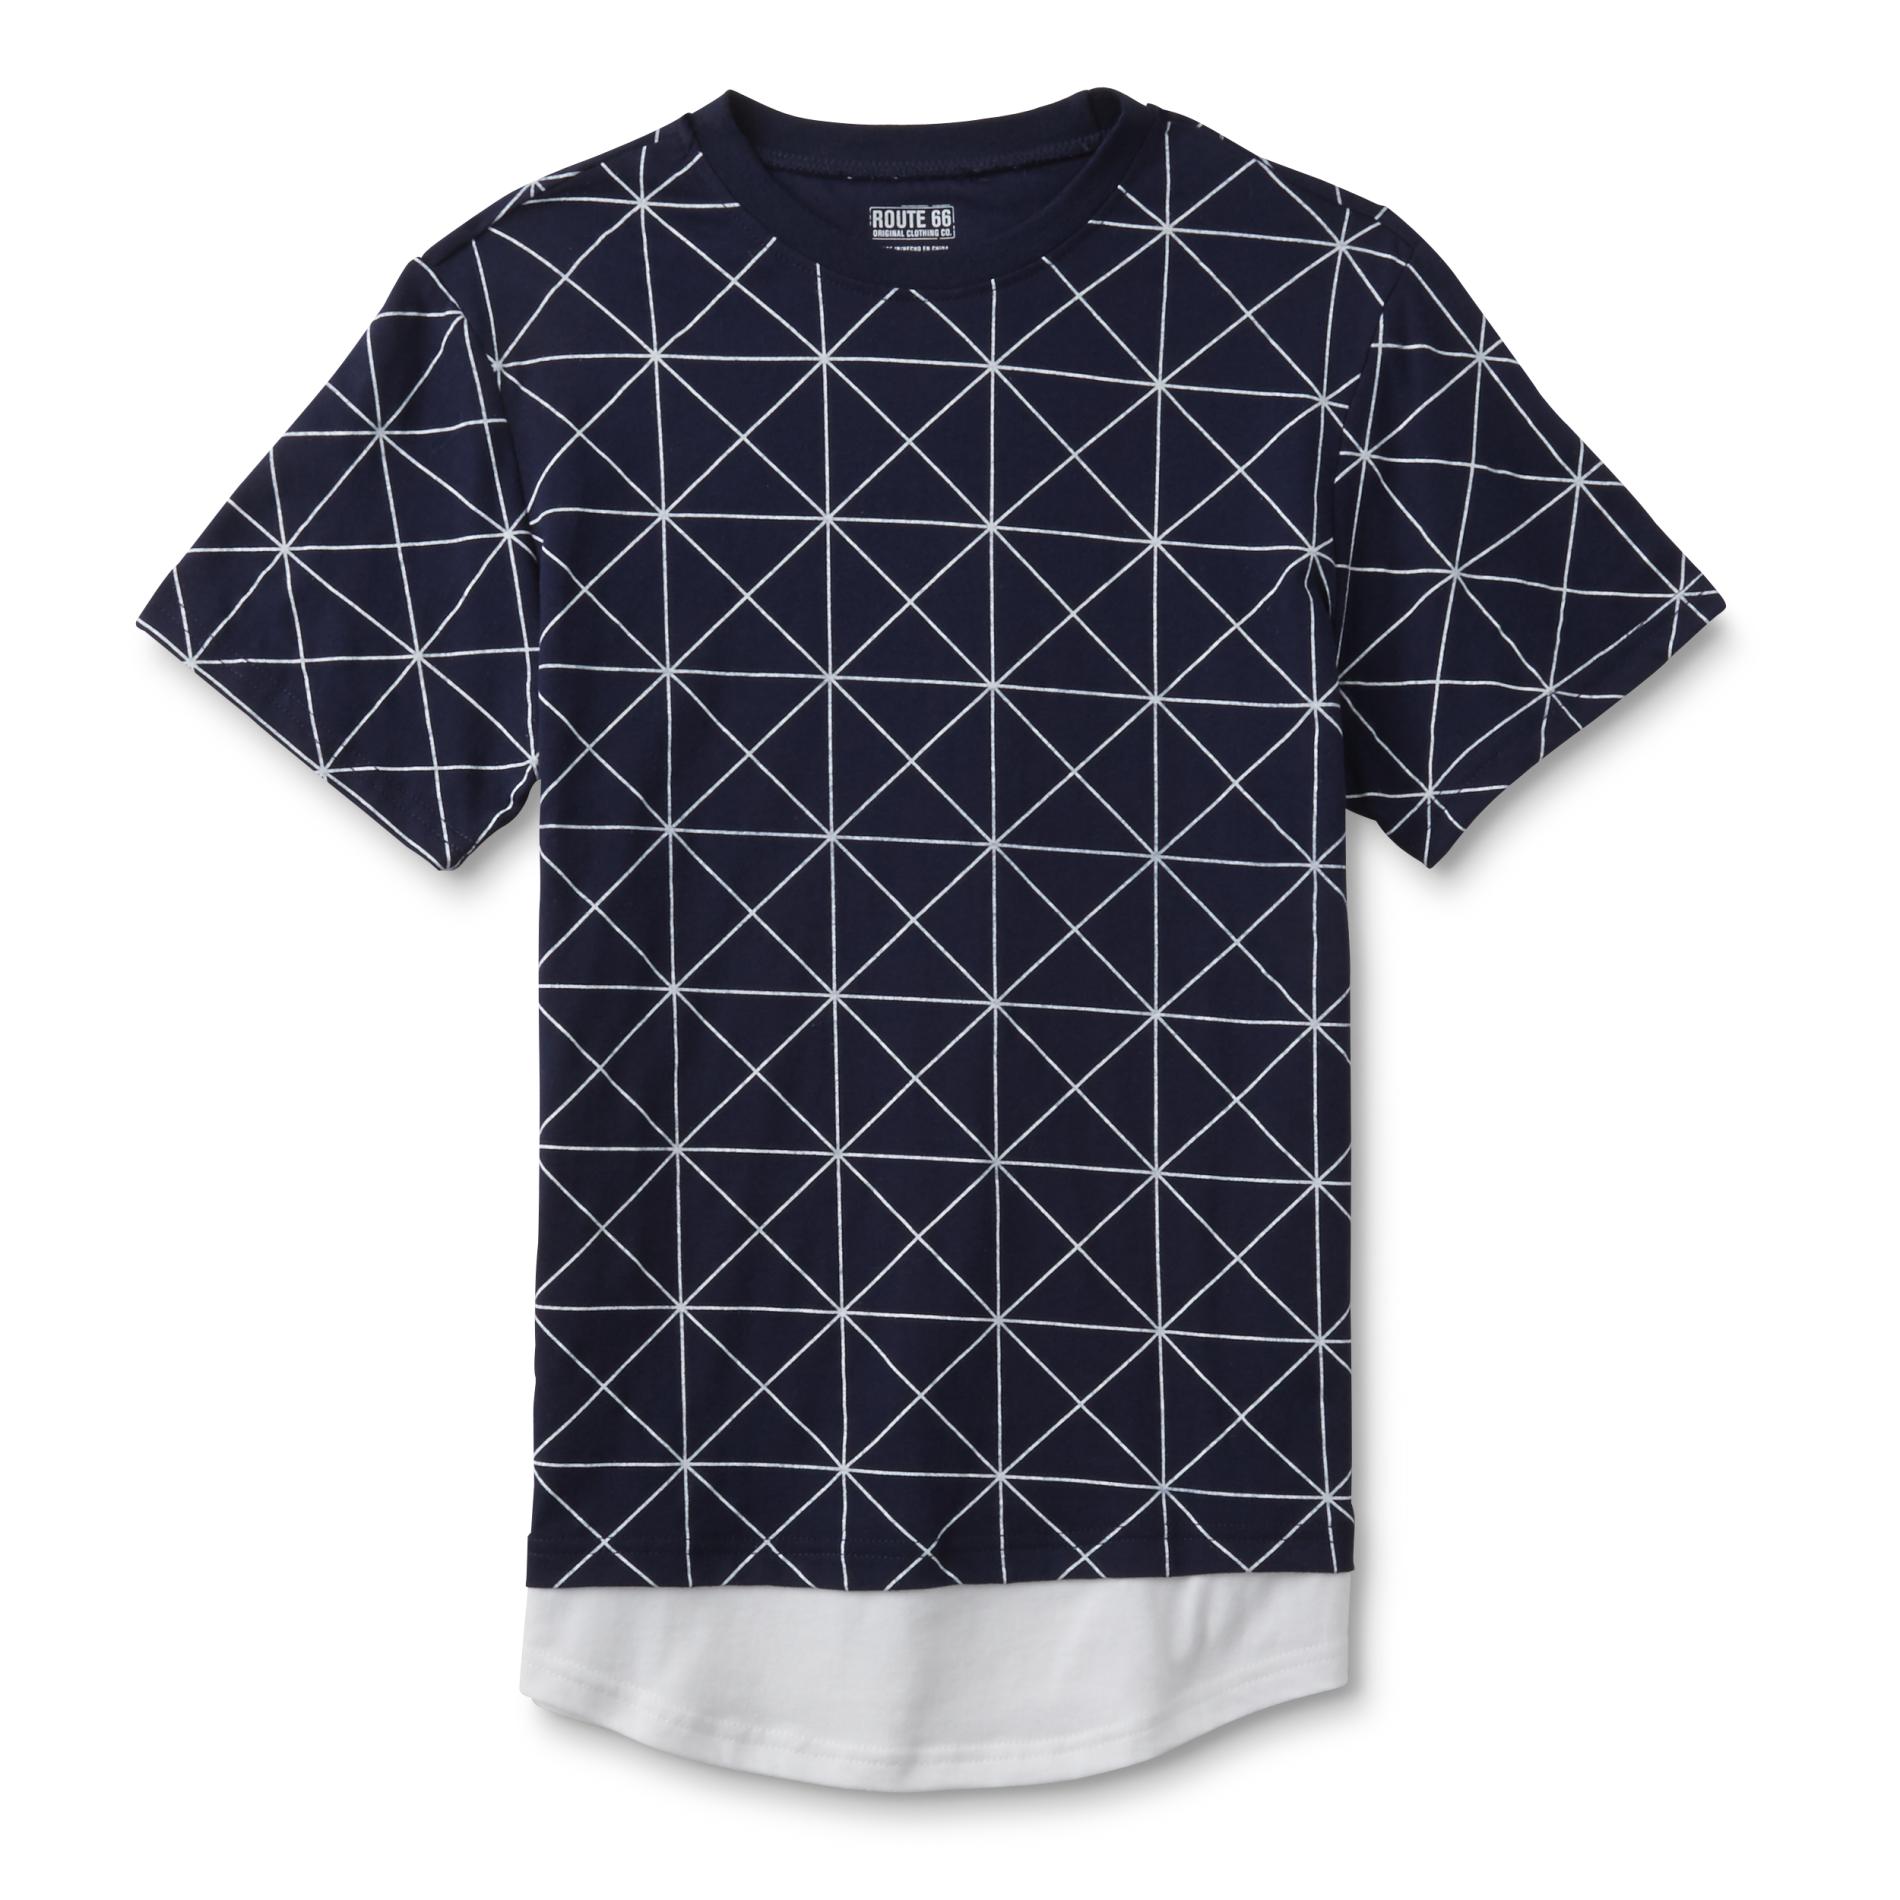 Route 66 Boy's Graphic T-Shirt - Grid